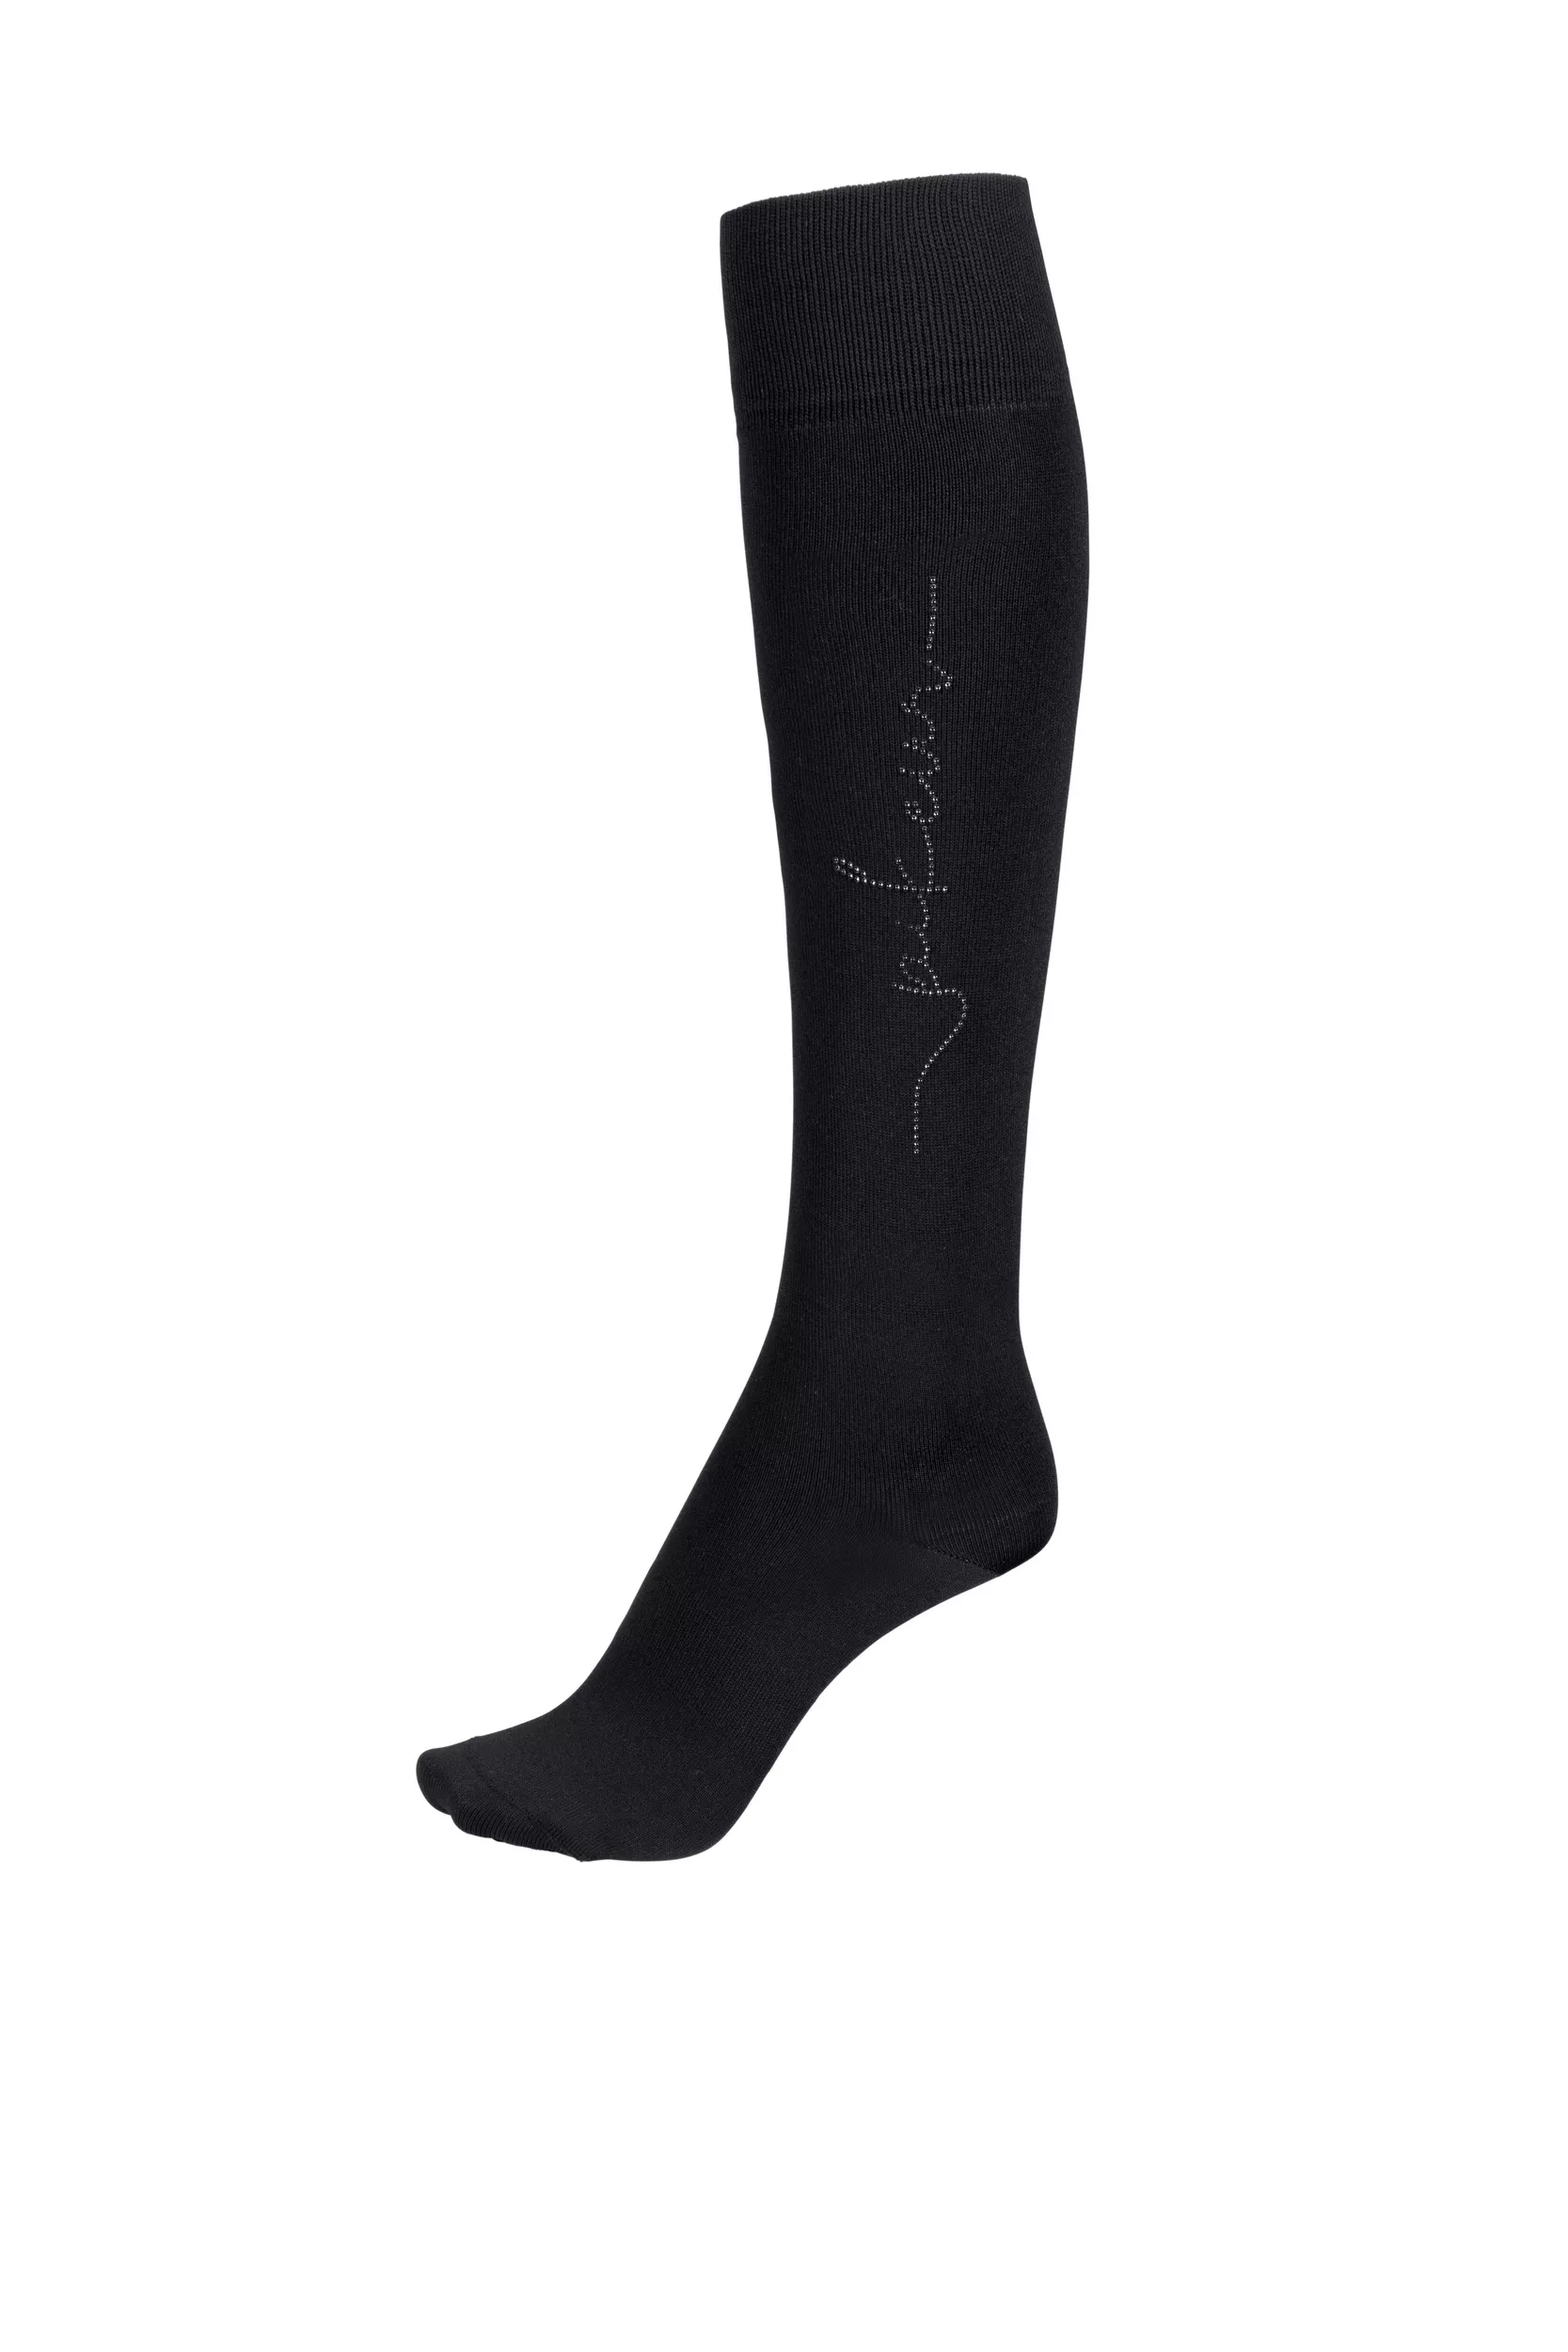 Reitsocken KNIE-STRUMPF Sportswear 22, schwarz